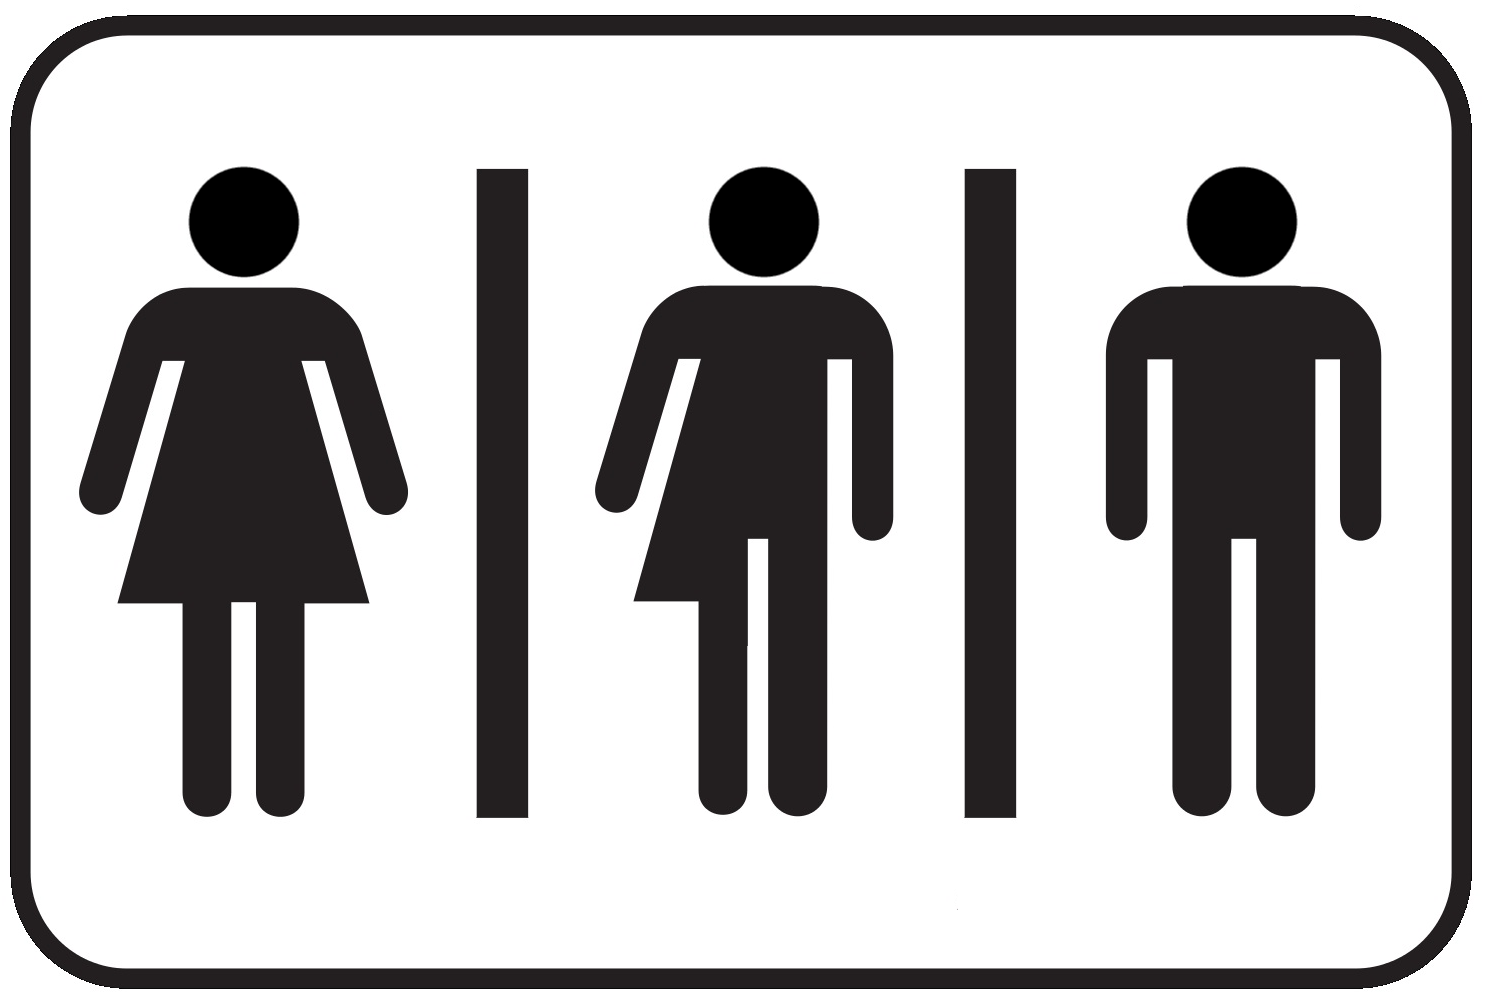 Girls bathroom sign.